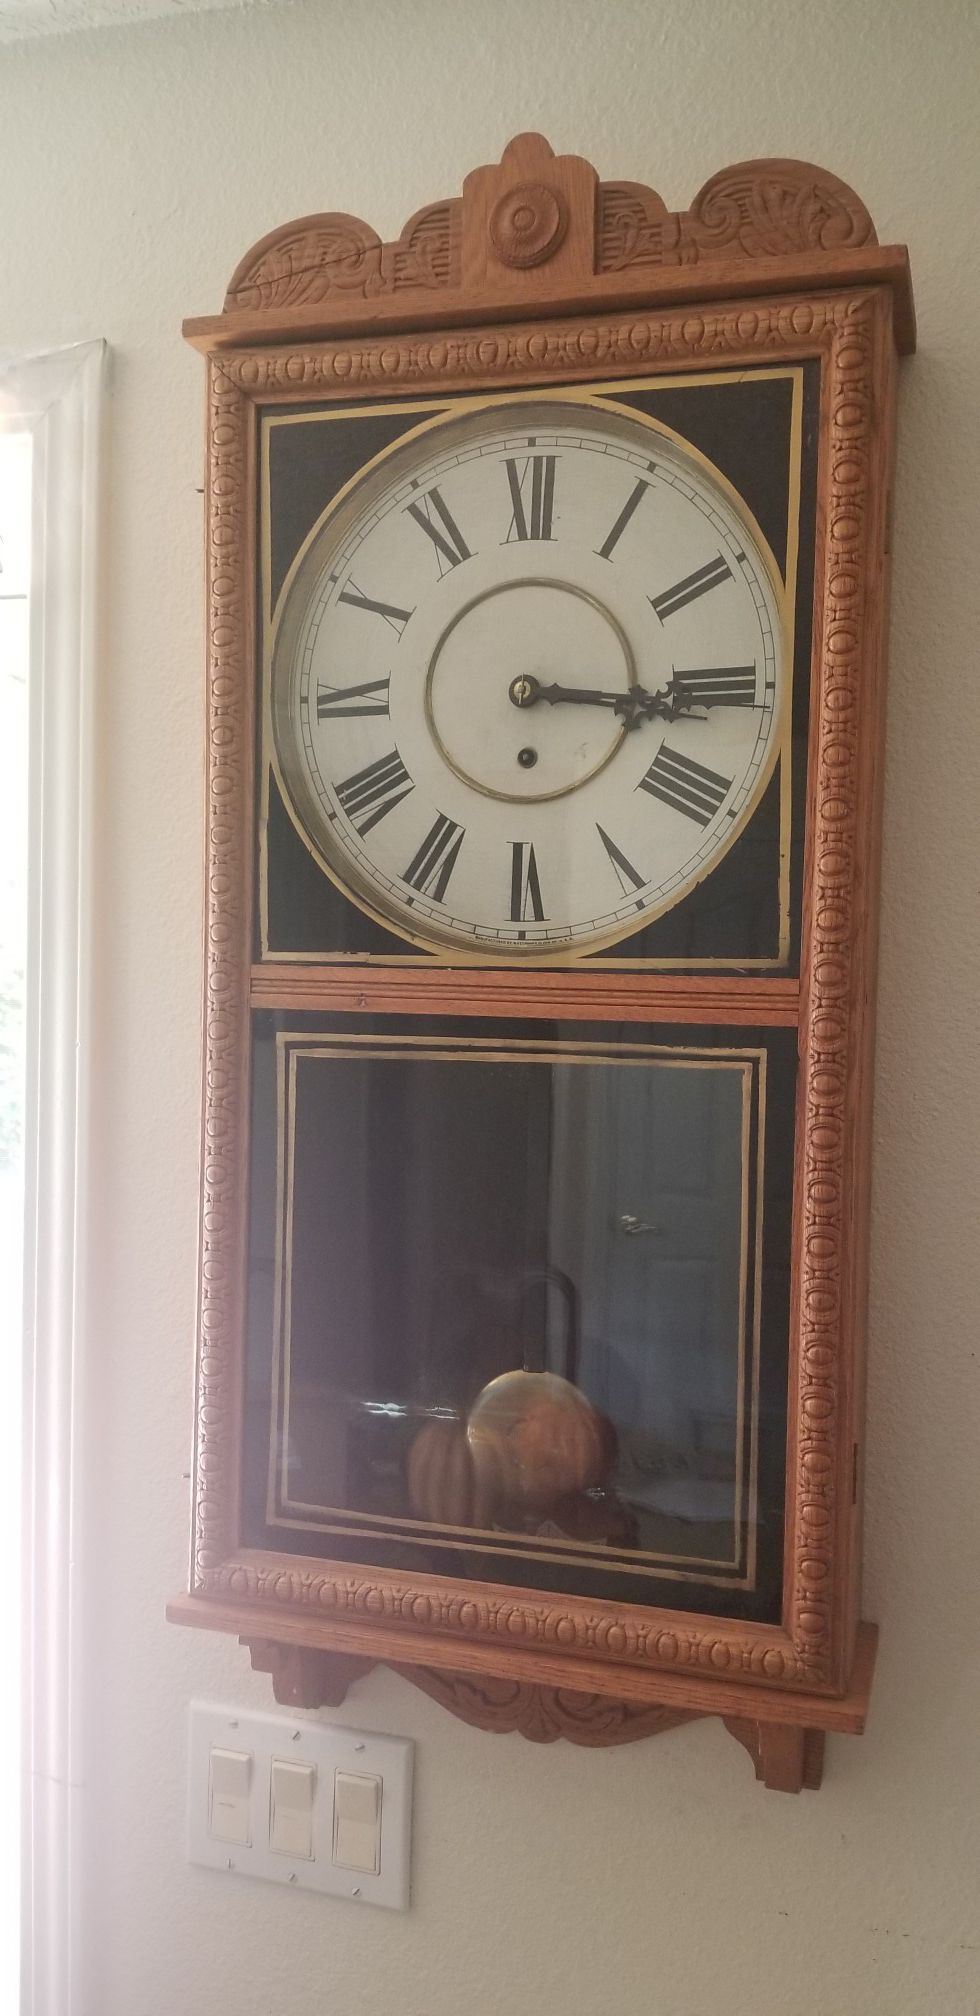 Antique waterbury clock